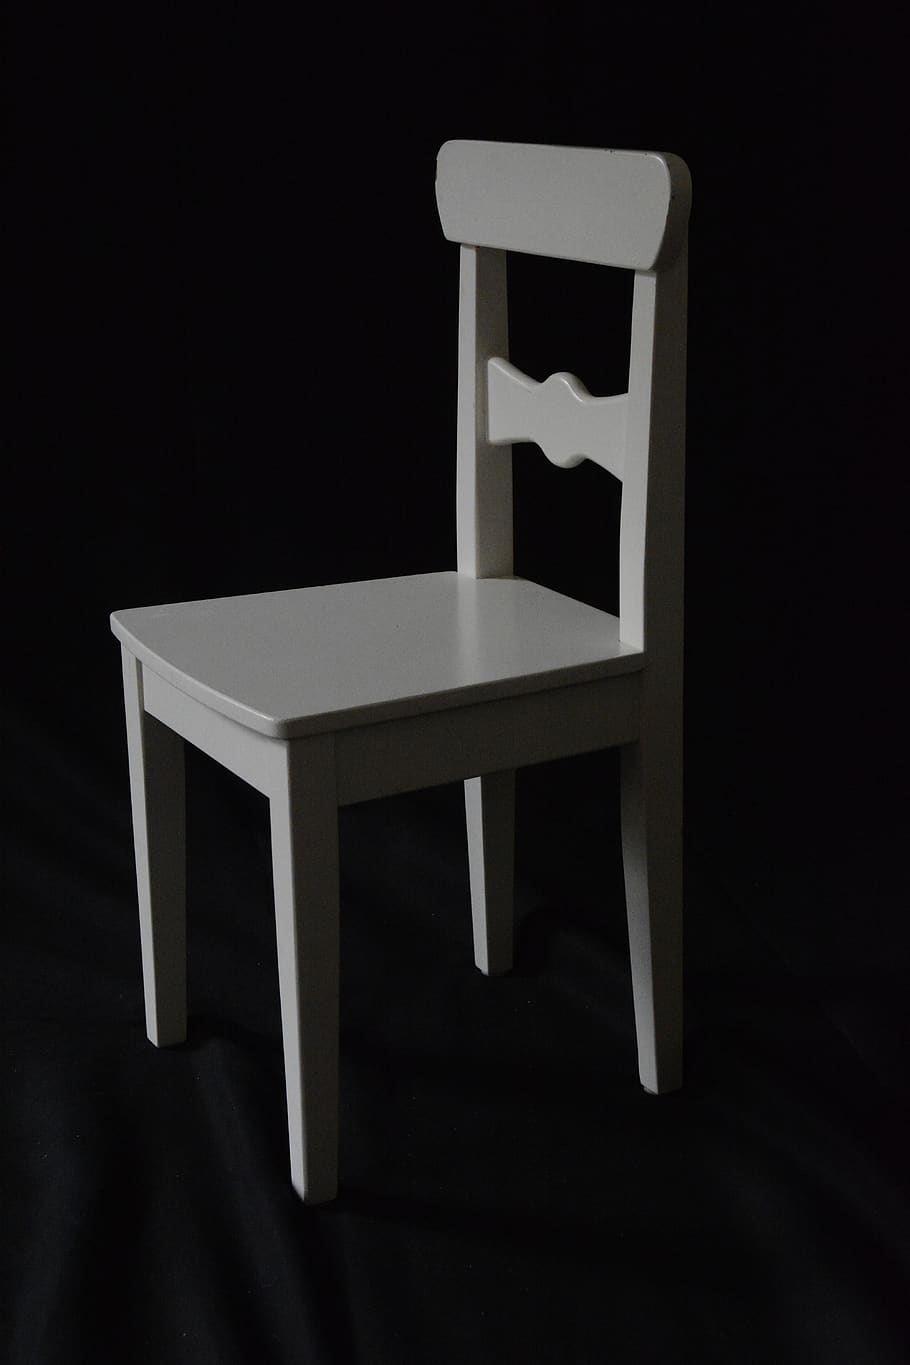 silla, negro, blanco, sentado, ikea, estética, agradable, sin gente, fondo negro, interior